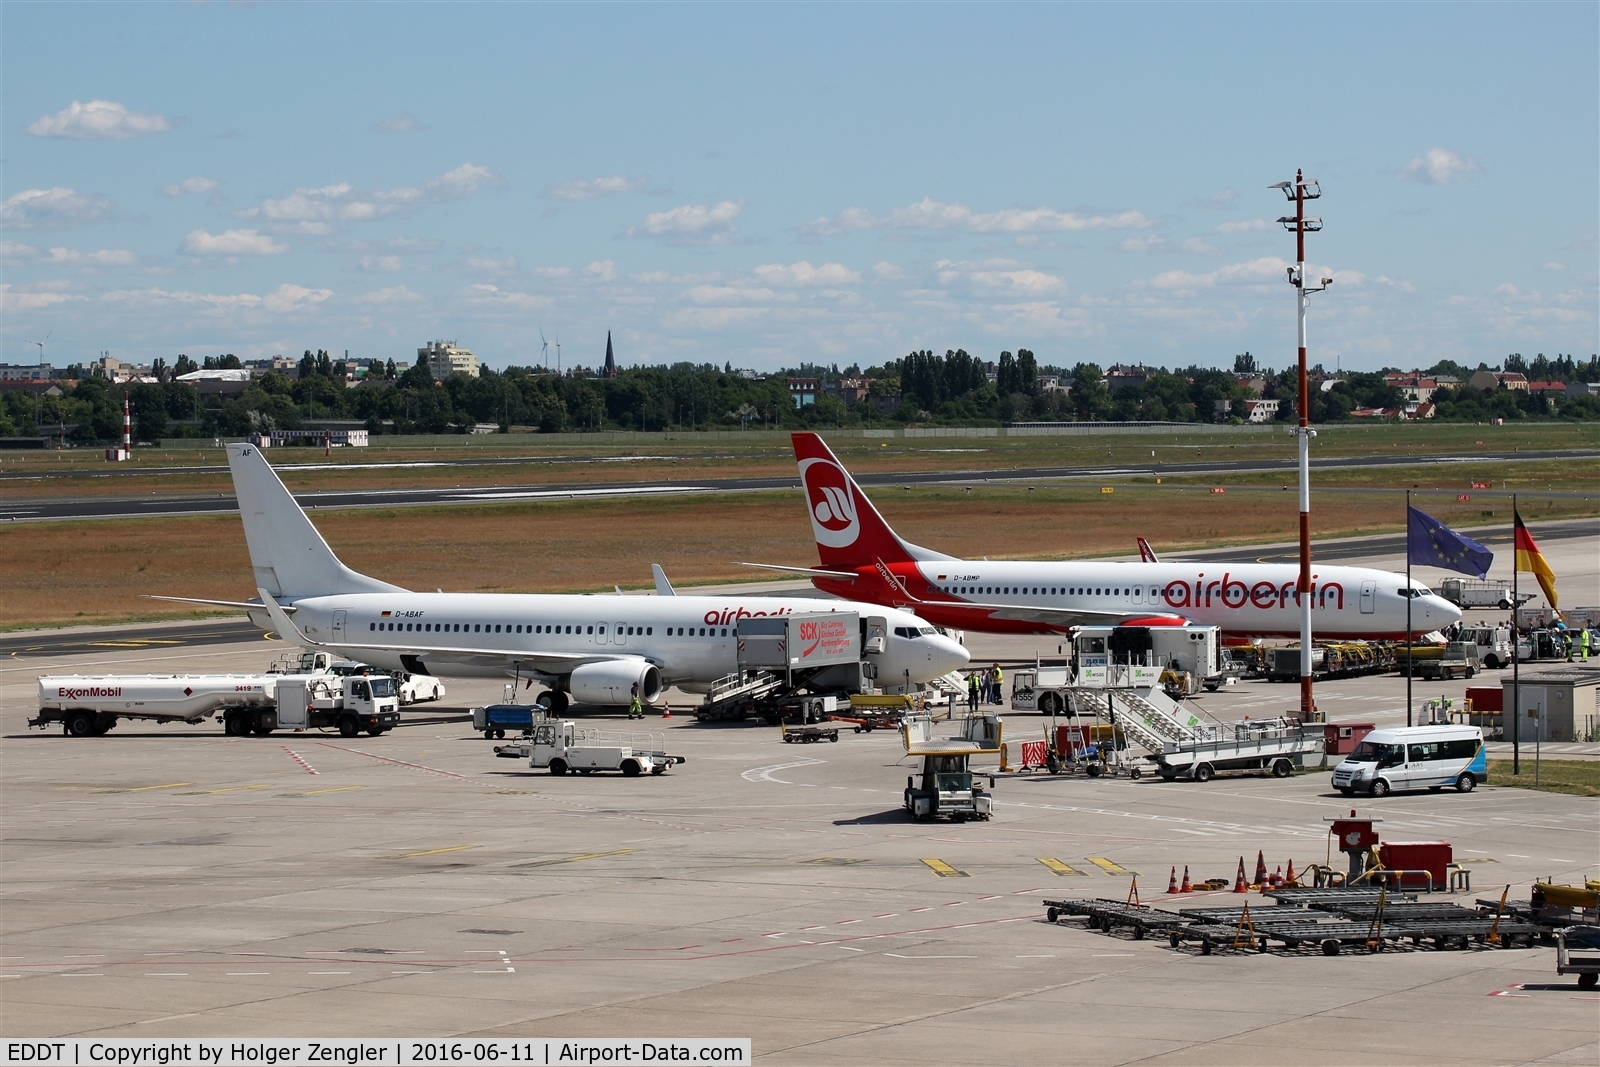 Tegel International Airport (closing in 2011), Berlin Germany (EDDT) - TXL waving good bye tour no.4 since 2011 